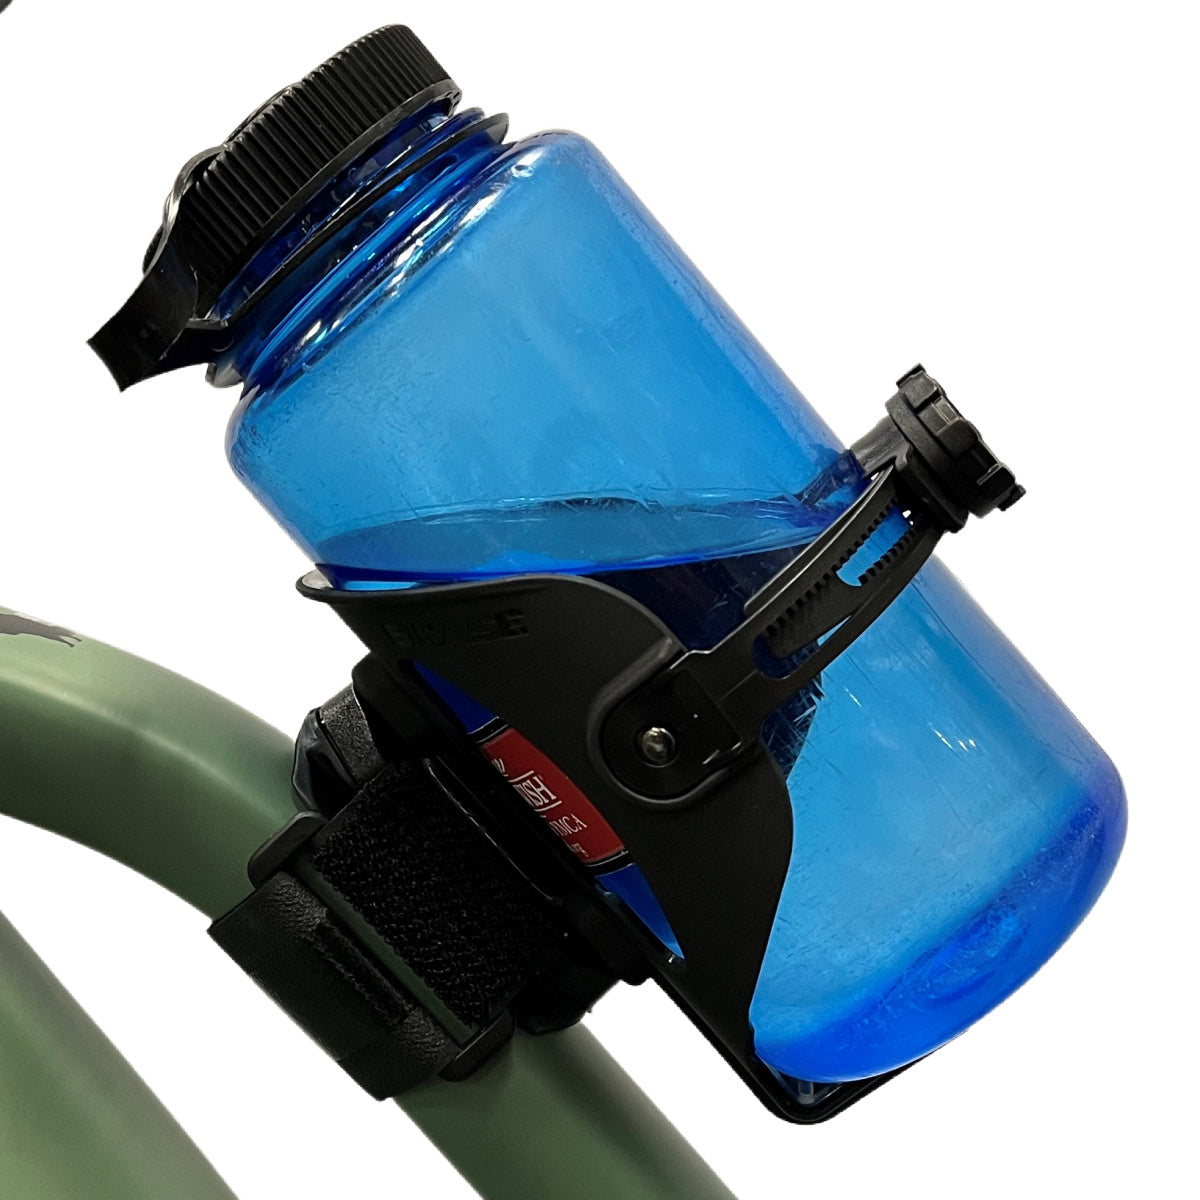 BiKASE Any Bottle Cage - Anywhere Strap - Most Versatile Bottle Holder